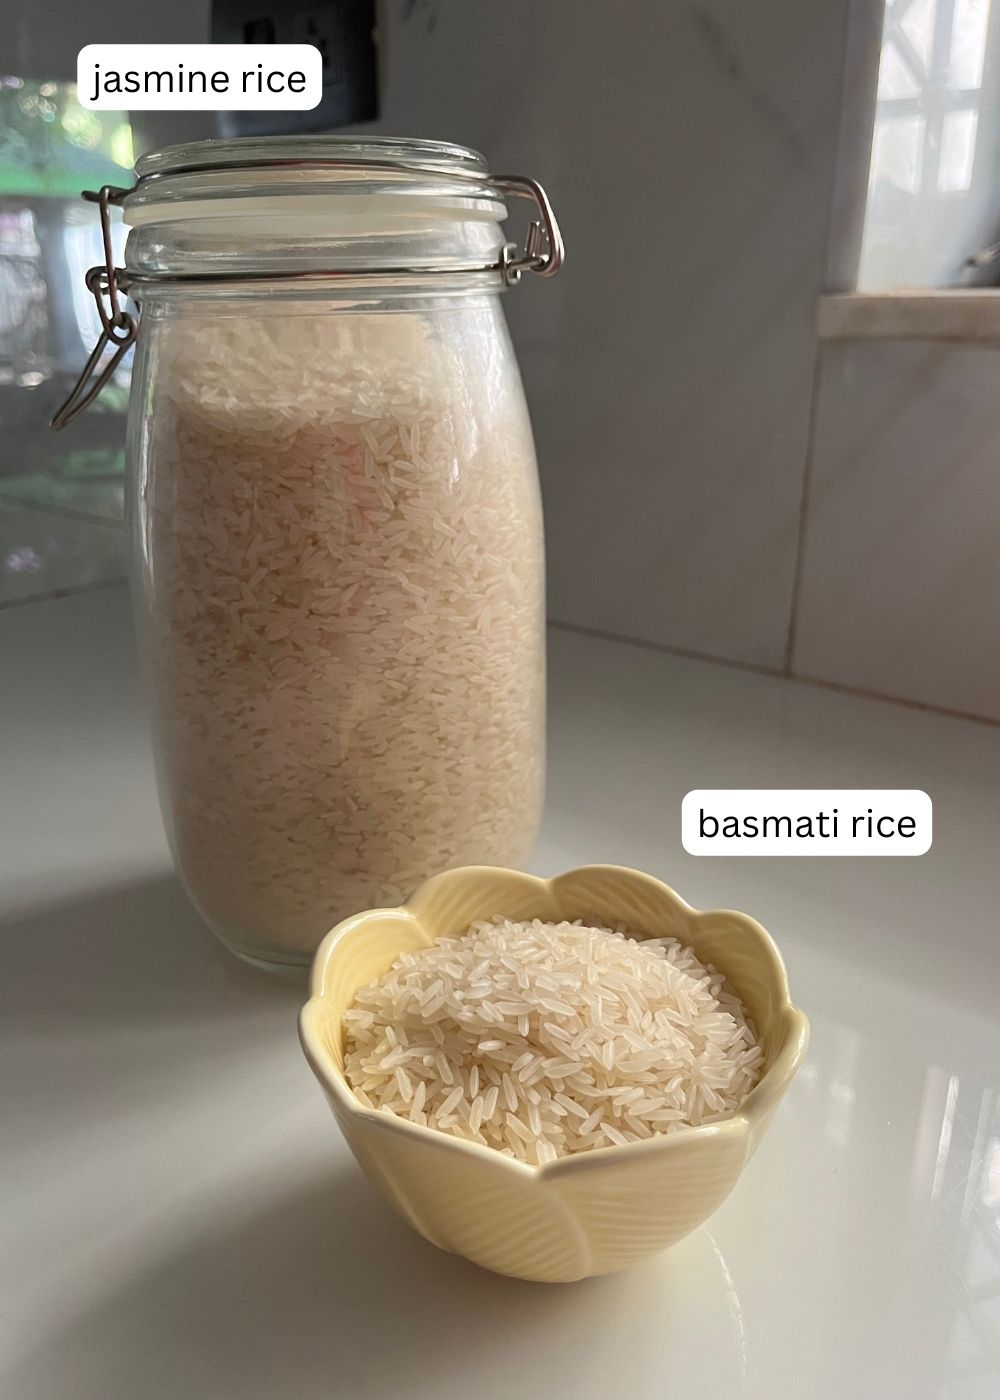 jasmine rice and basmati rice